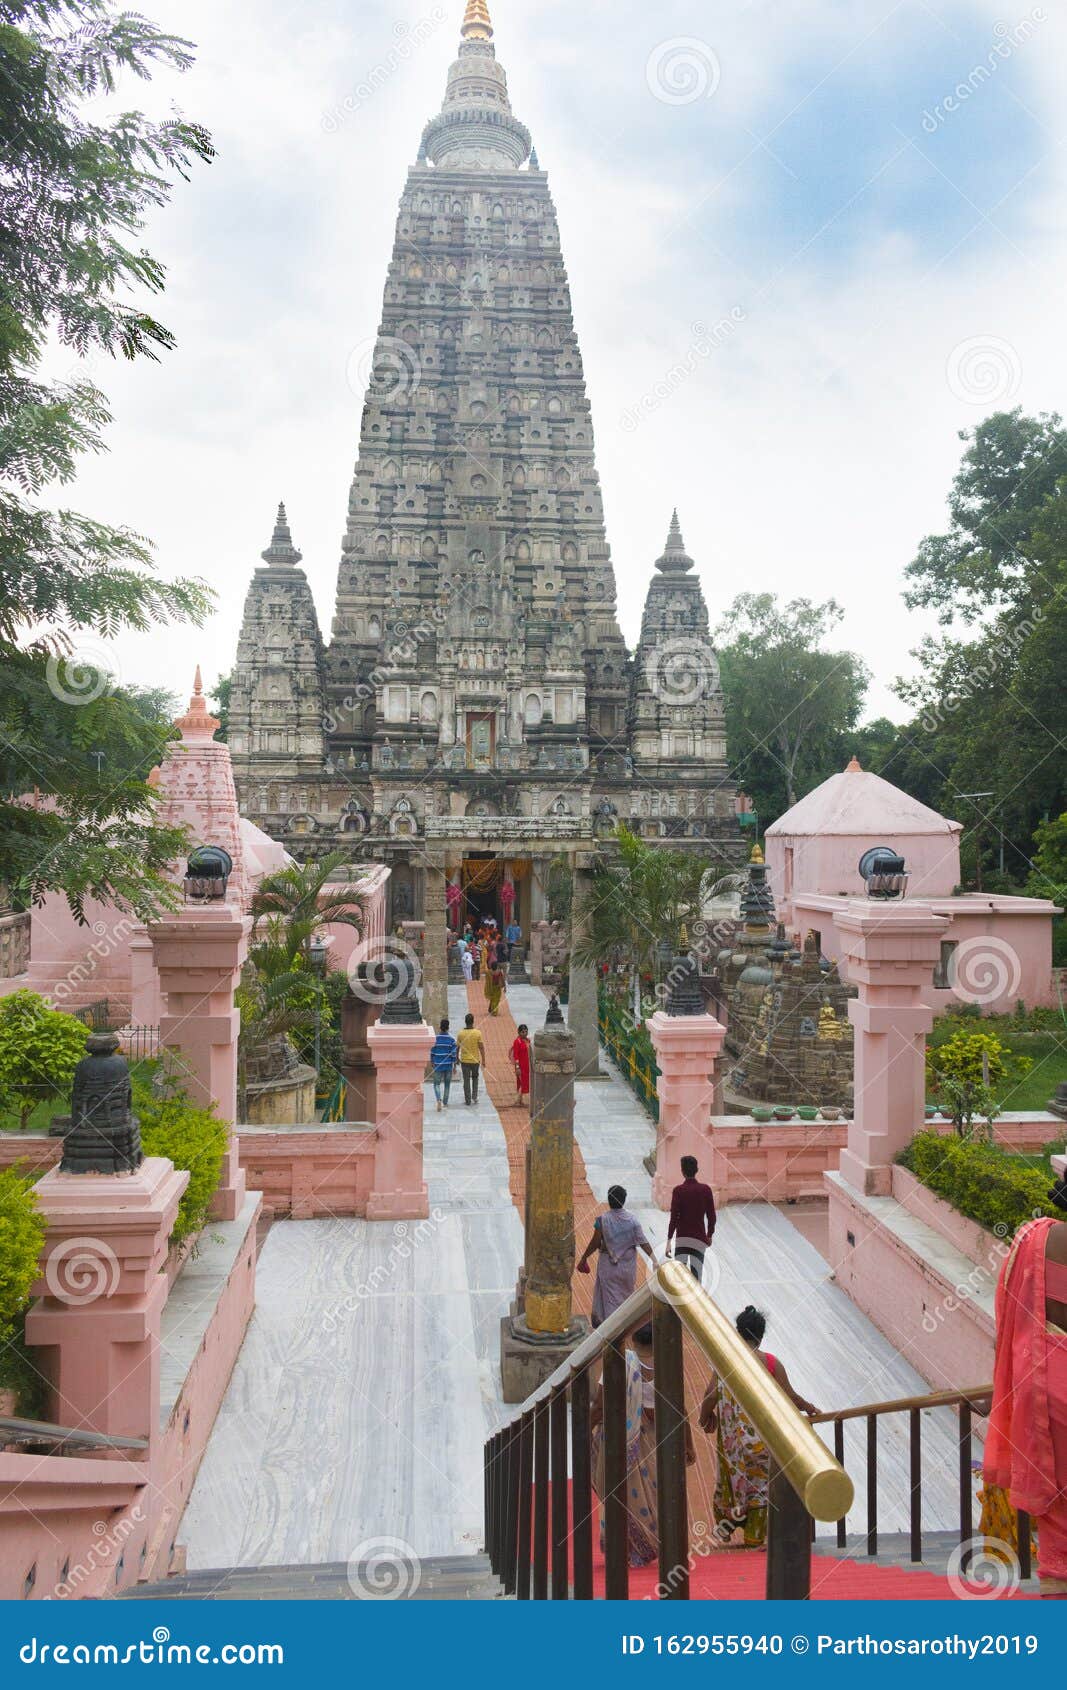 Bodhgaya-The land of Enlightenment of Lord Buddha - Tripoto